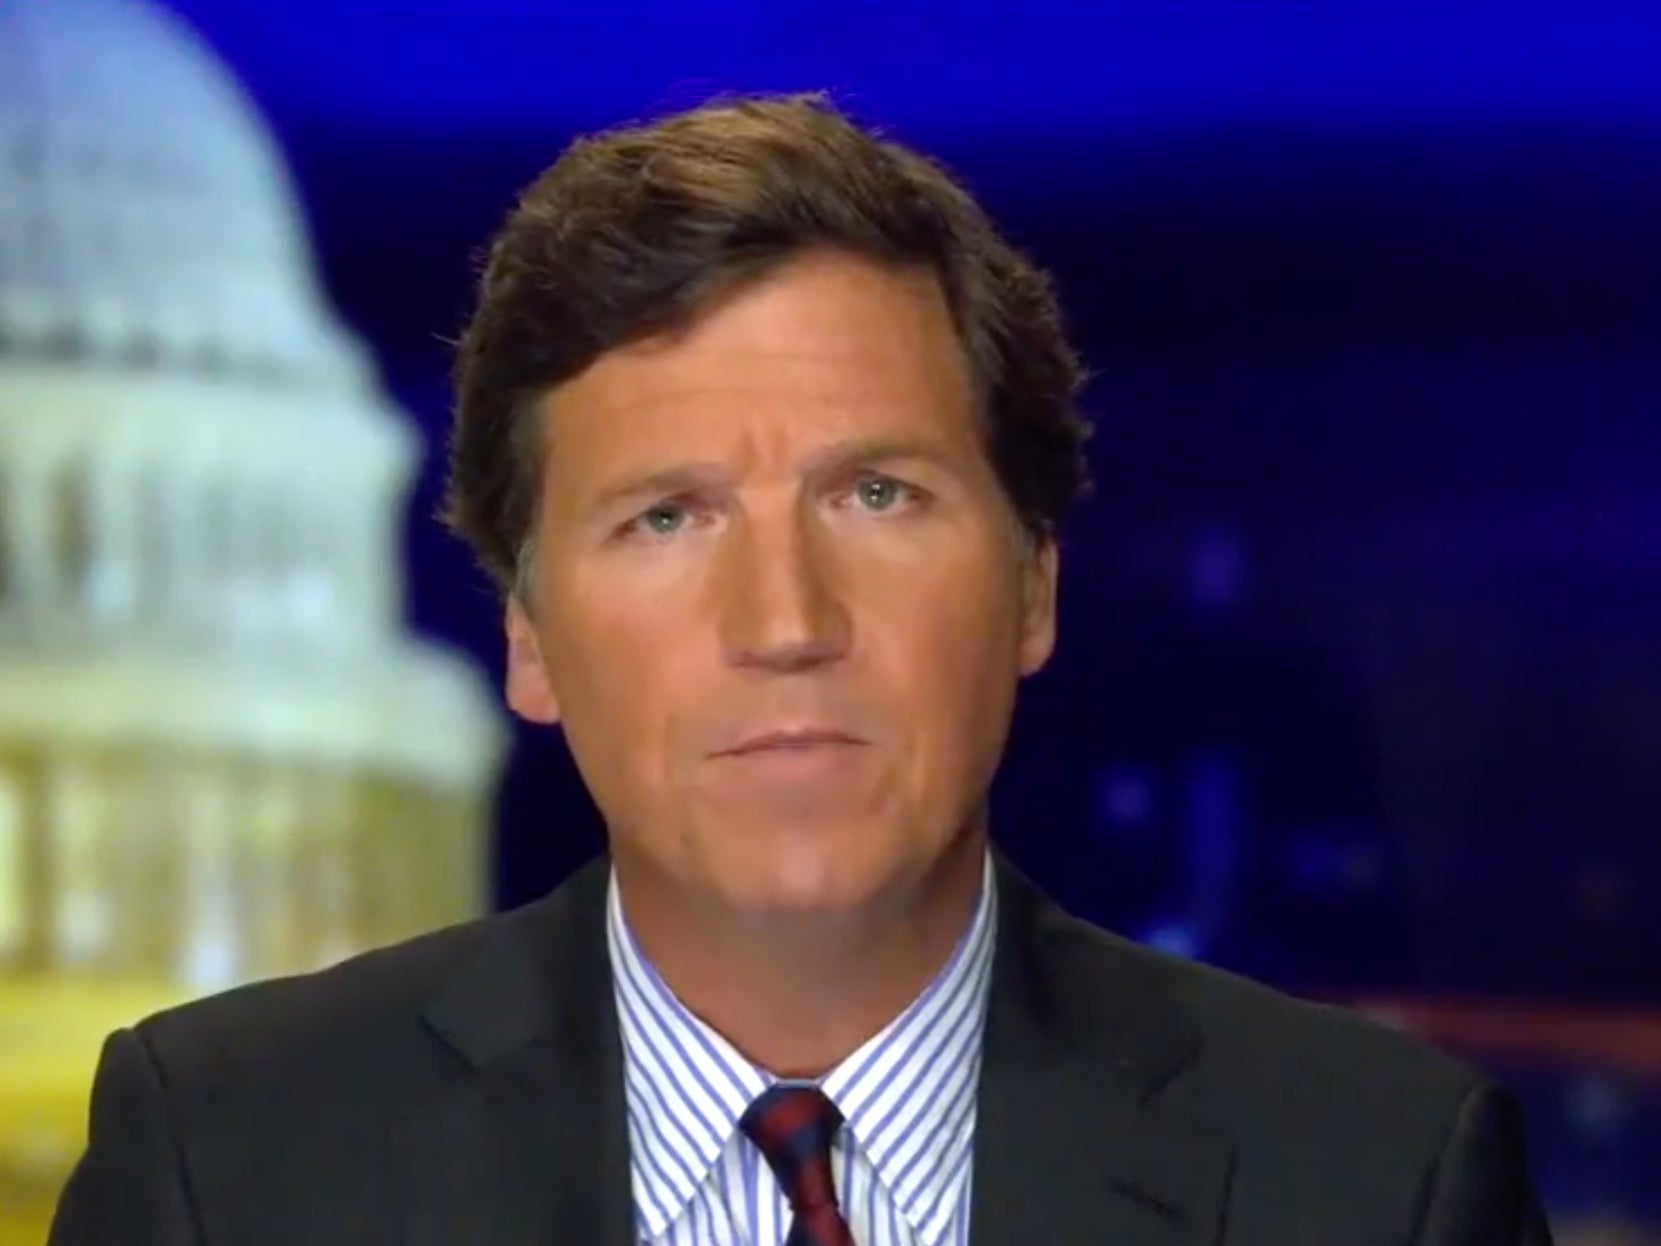 The new face of the GOP? Fox News presenter Tucker Carlson